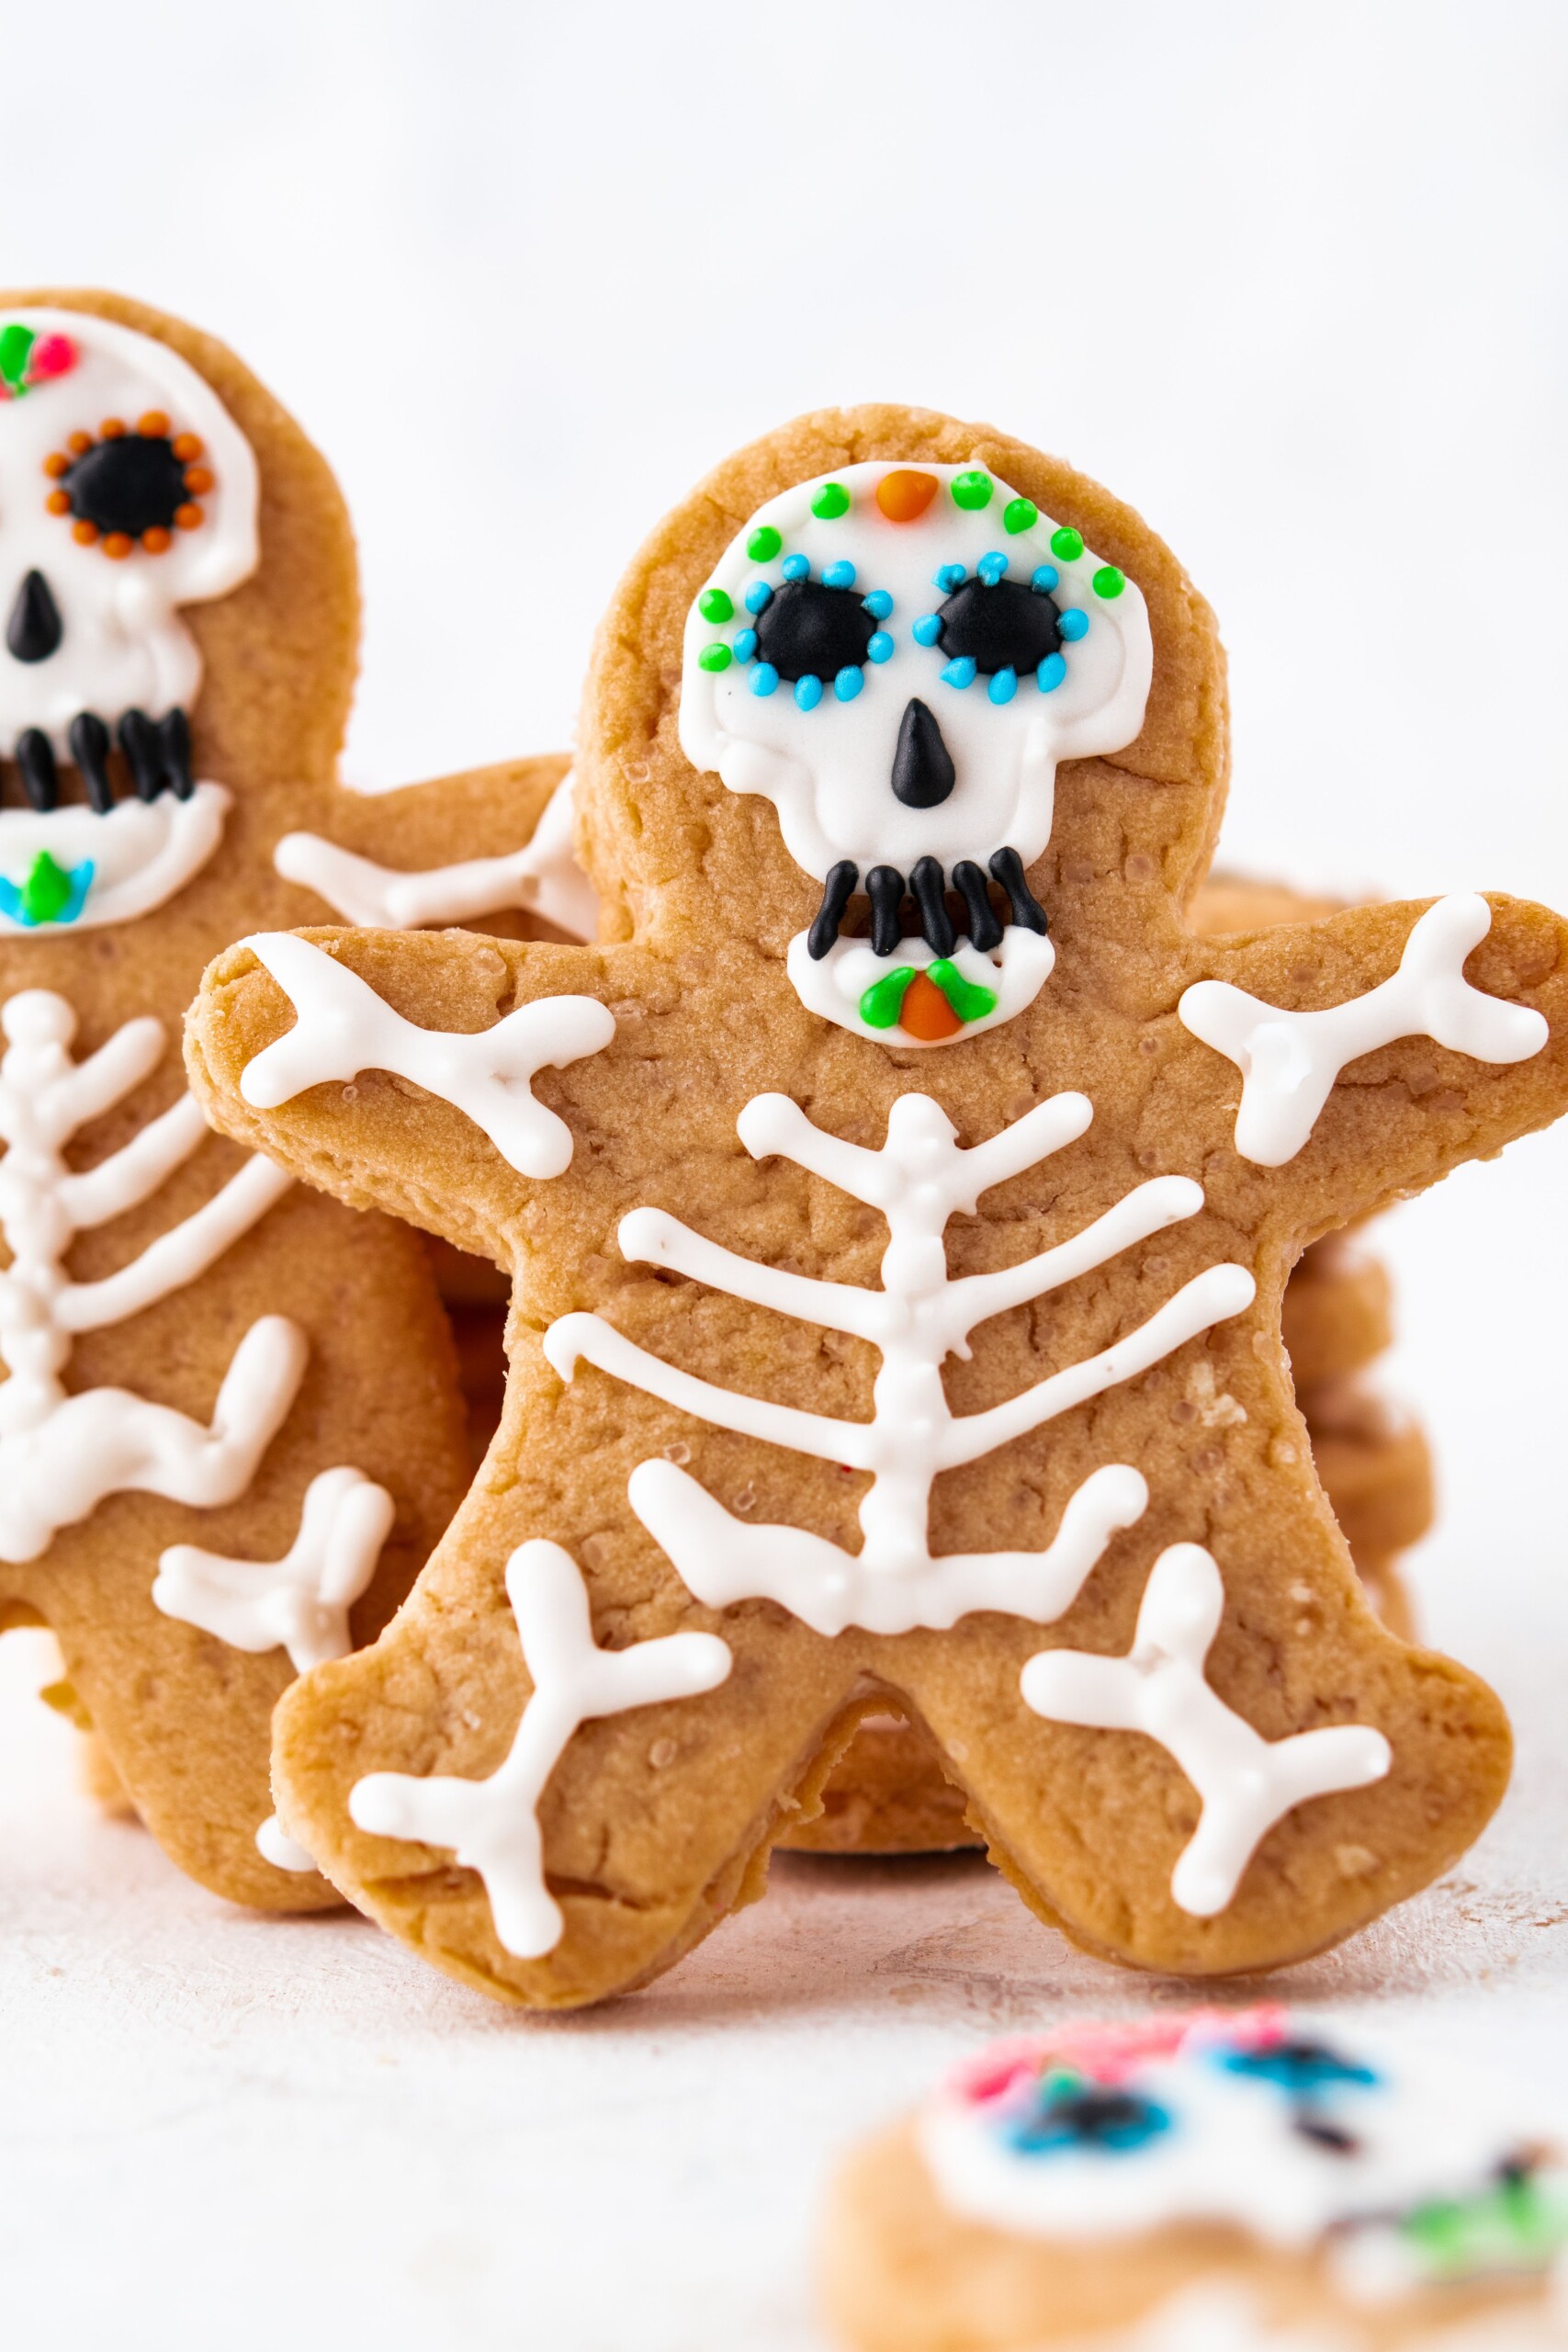 Halloween skeleton cookies on a white surface.